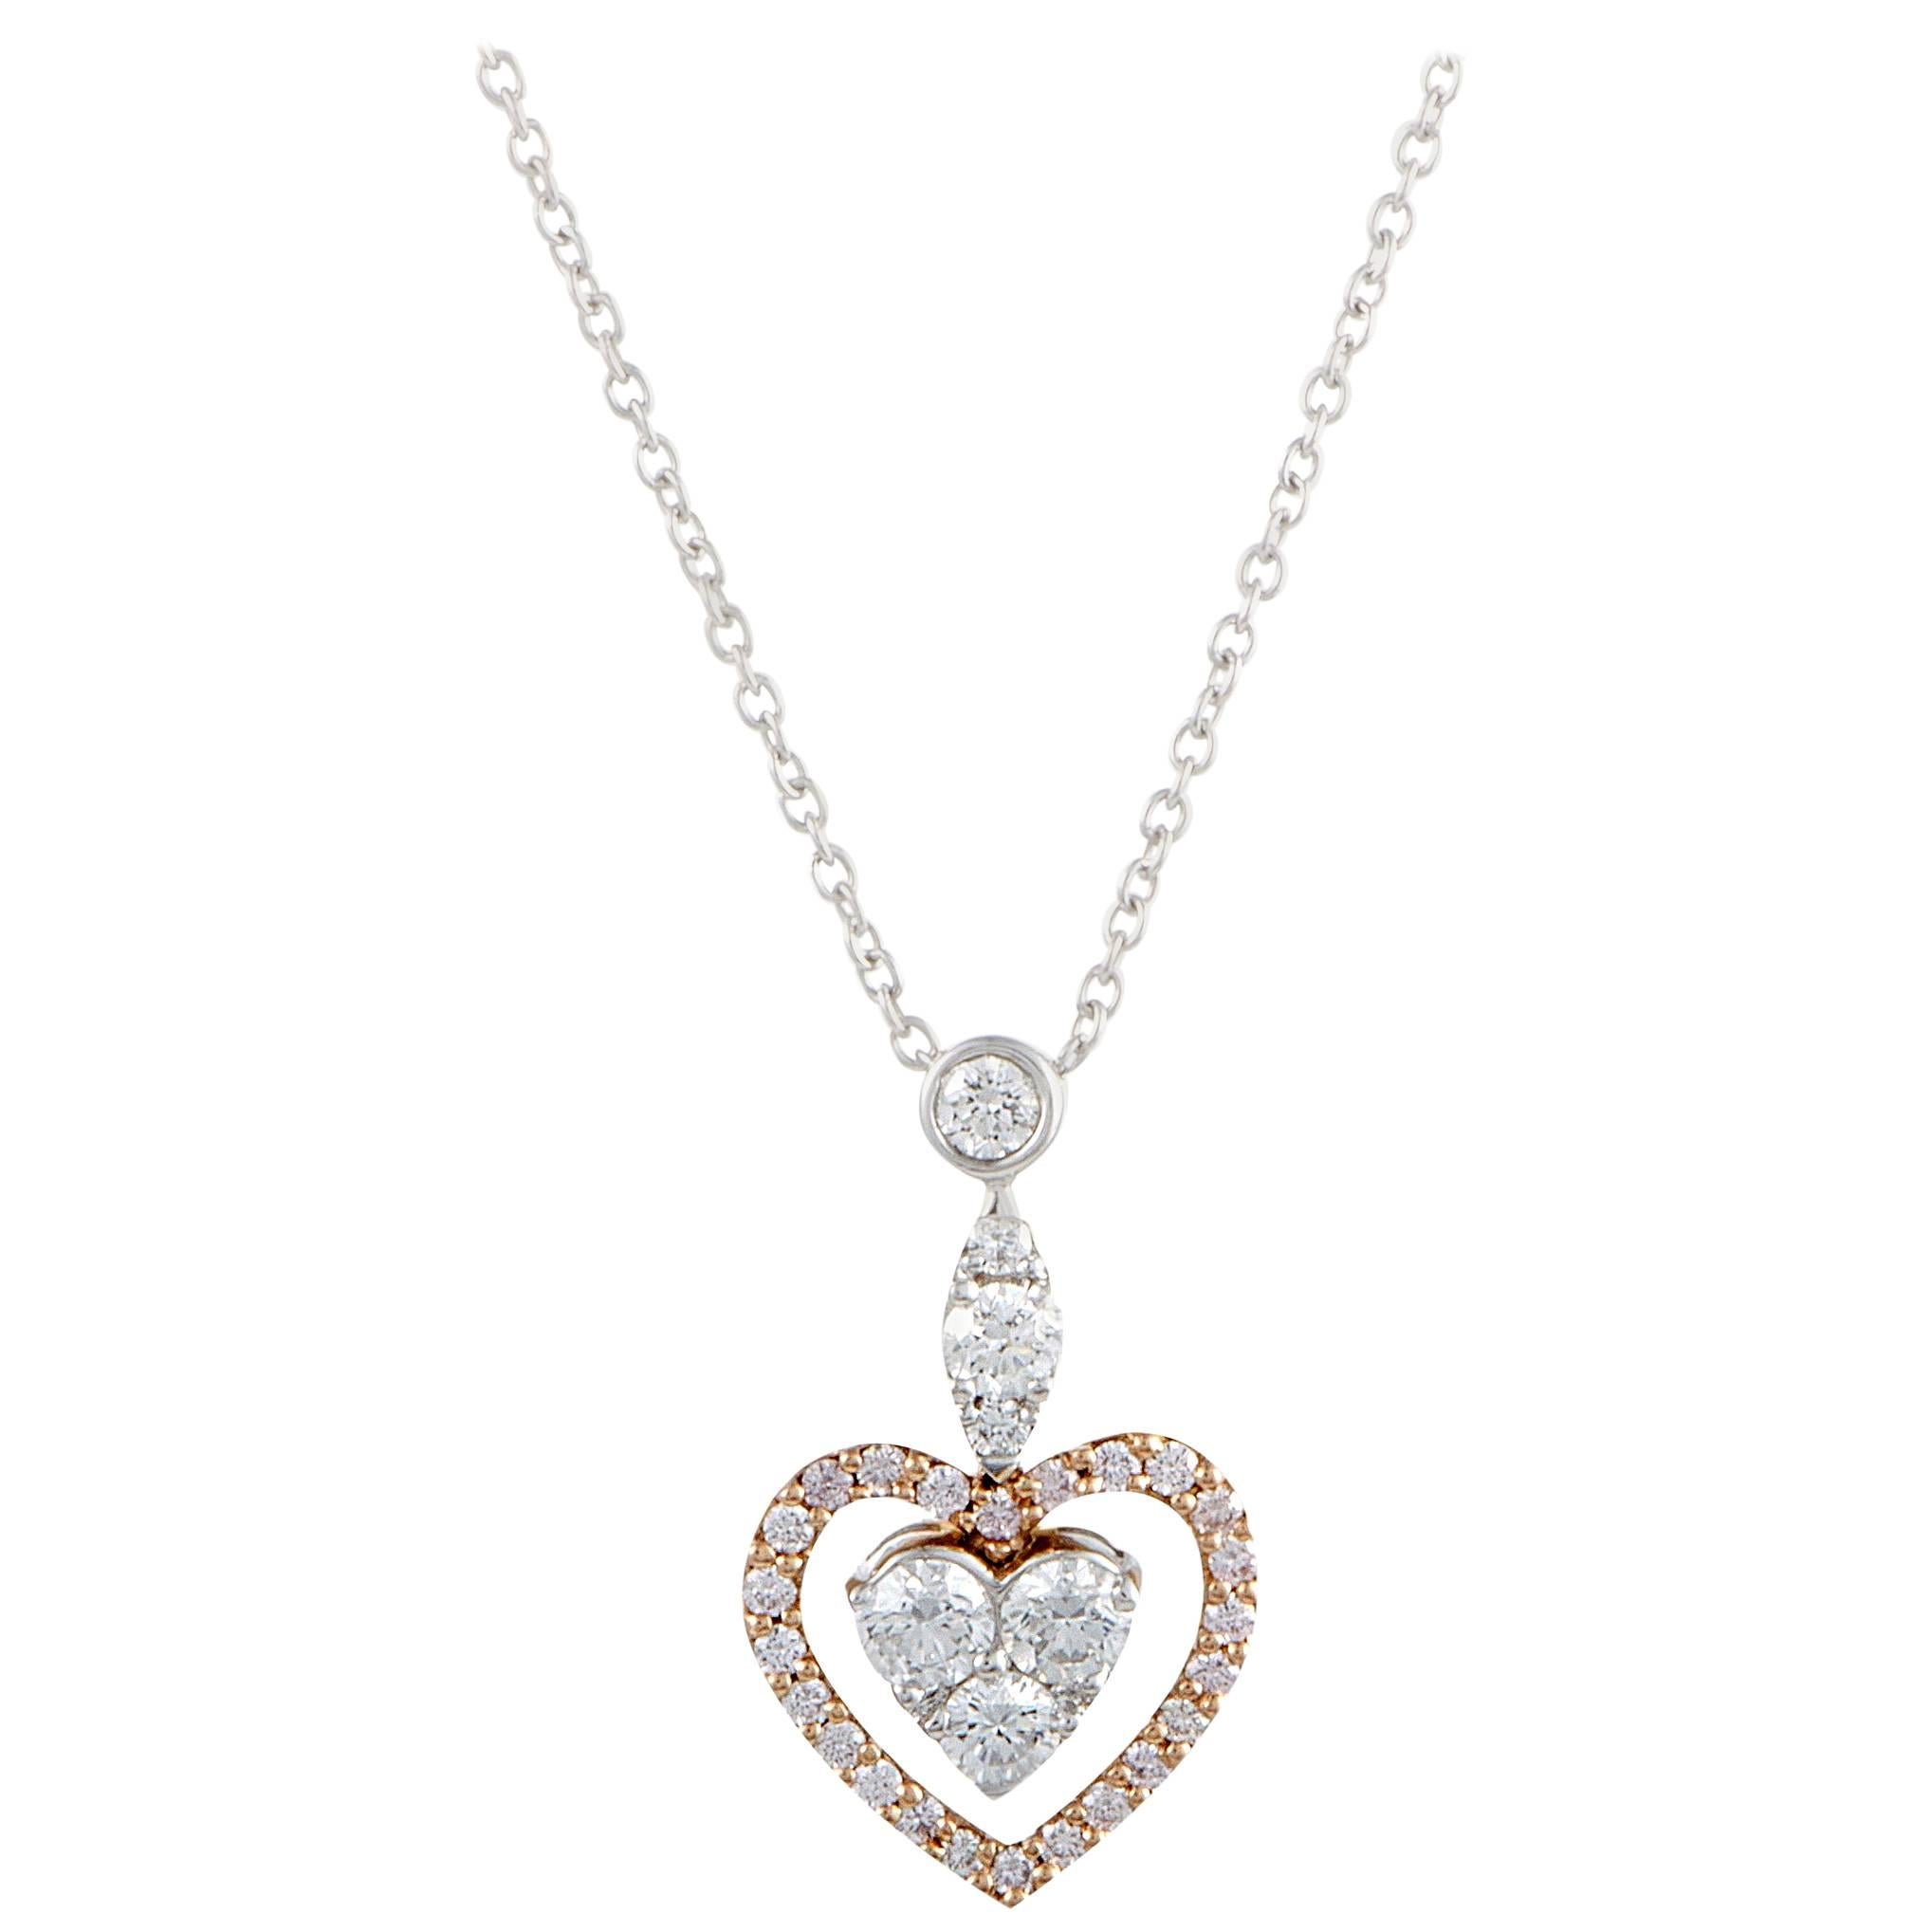 Gregg Ruth 18 Karat White and Rose Gold Diamond Heart Pendant Necklace